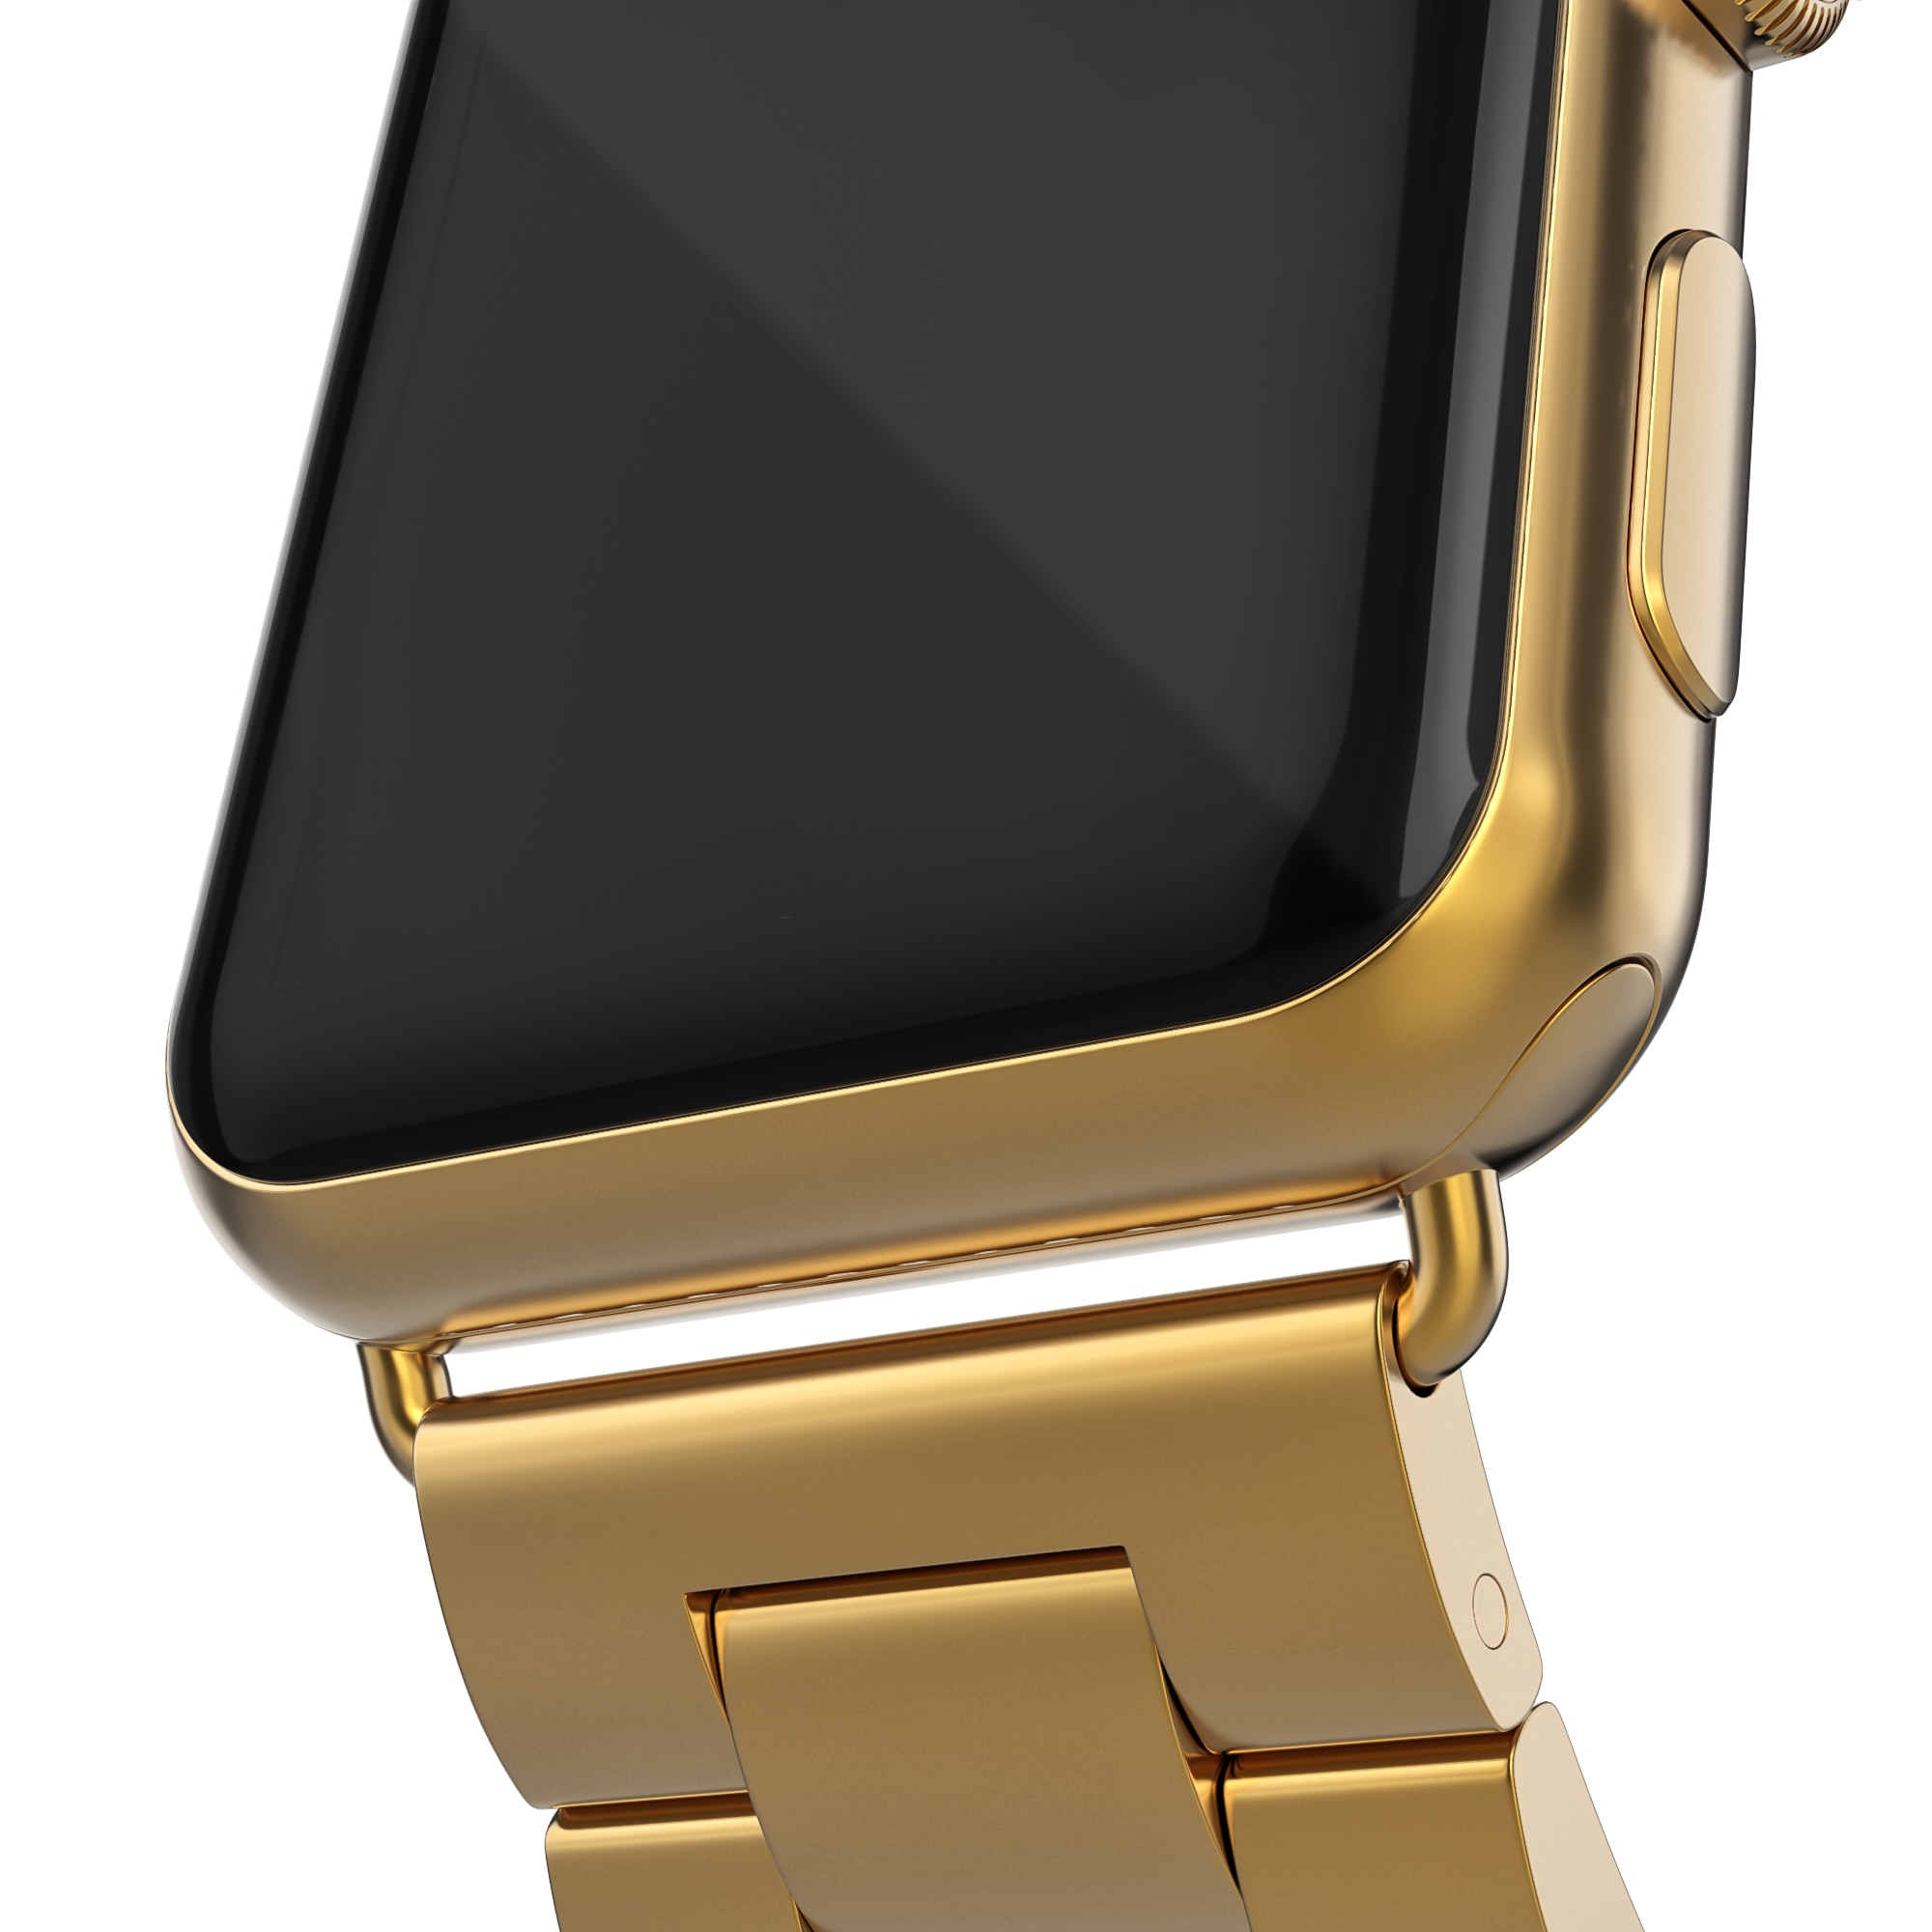 Metallarmband Apple Watch 38mm guld